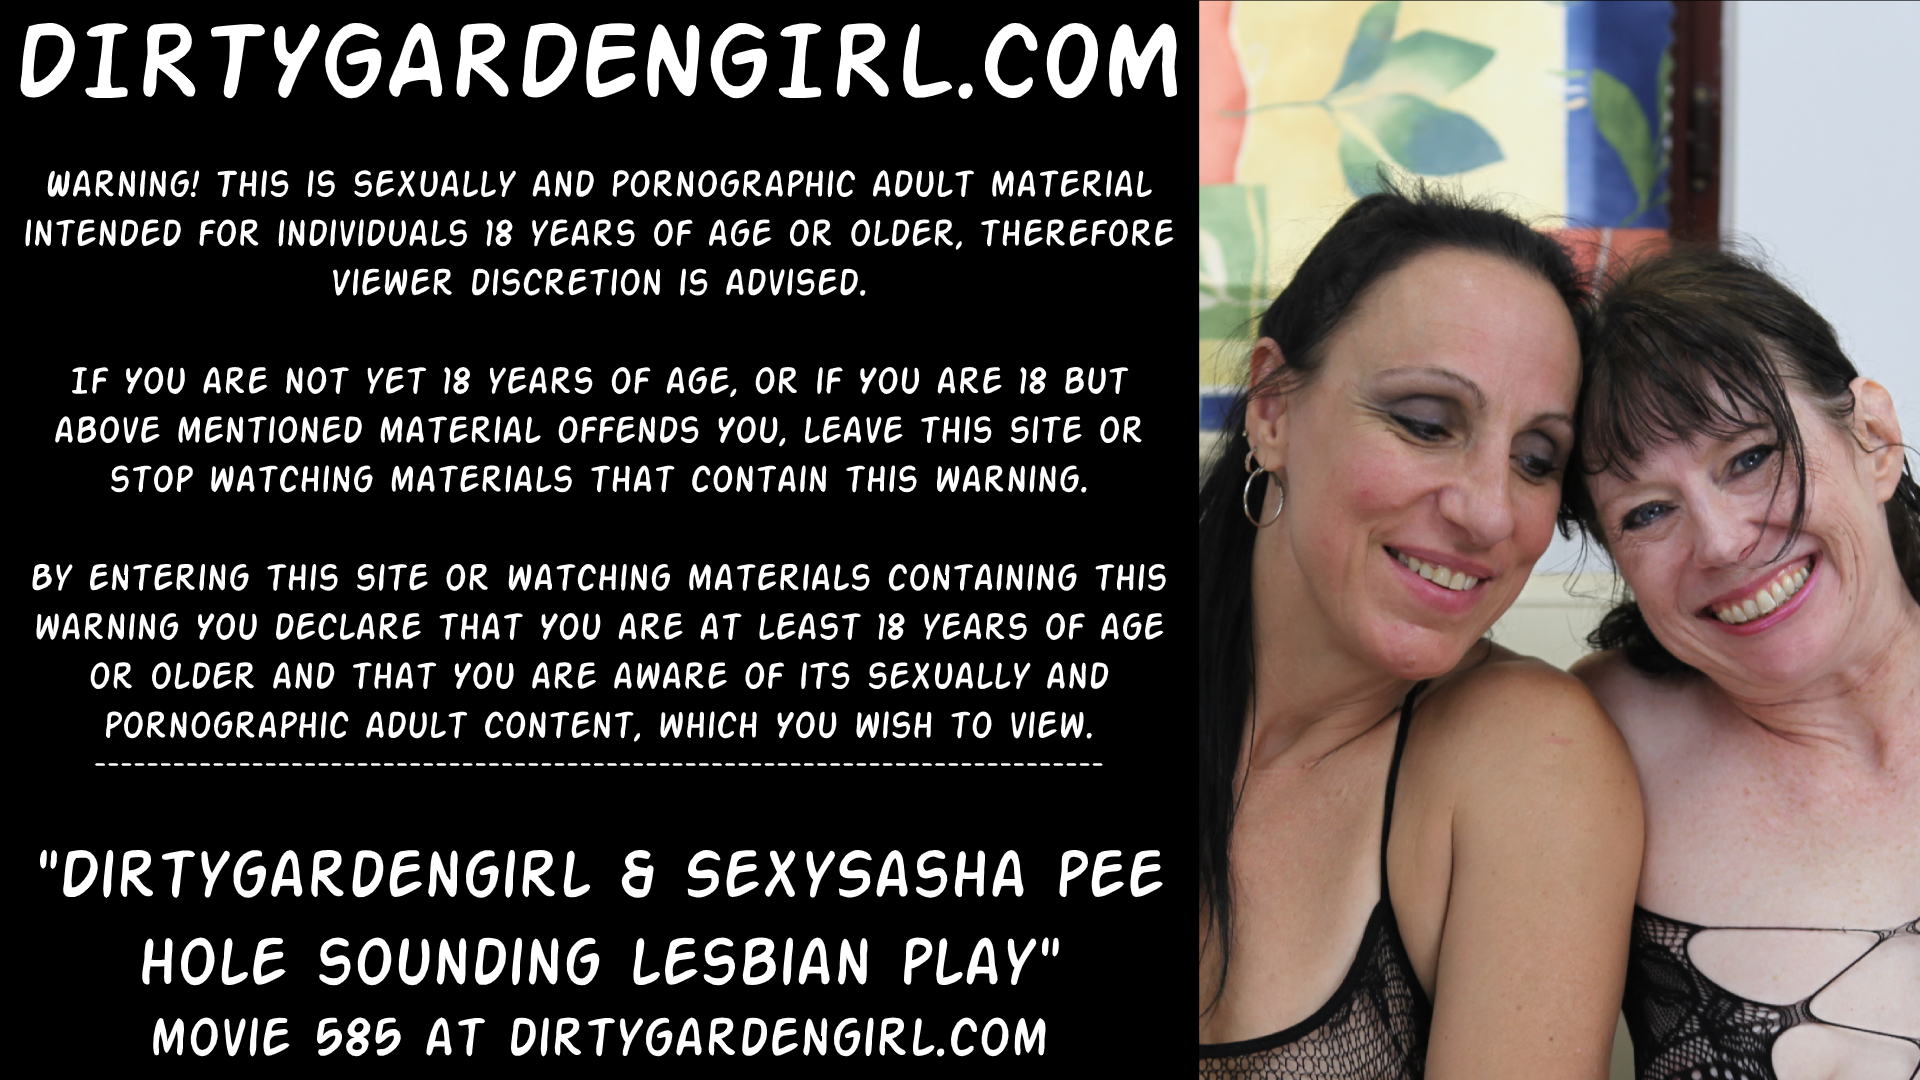 Dirtygardengirl & ... pee hole sounding lesbian play